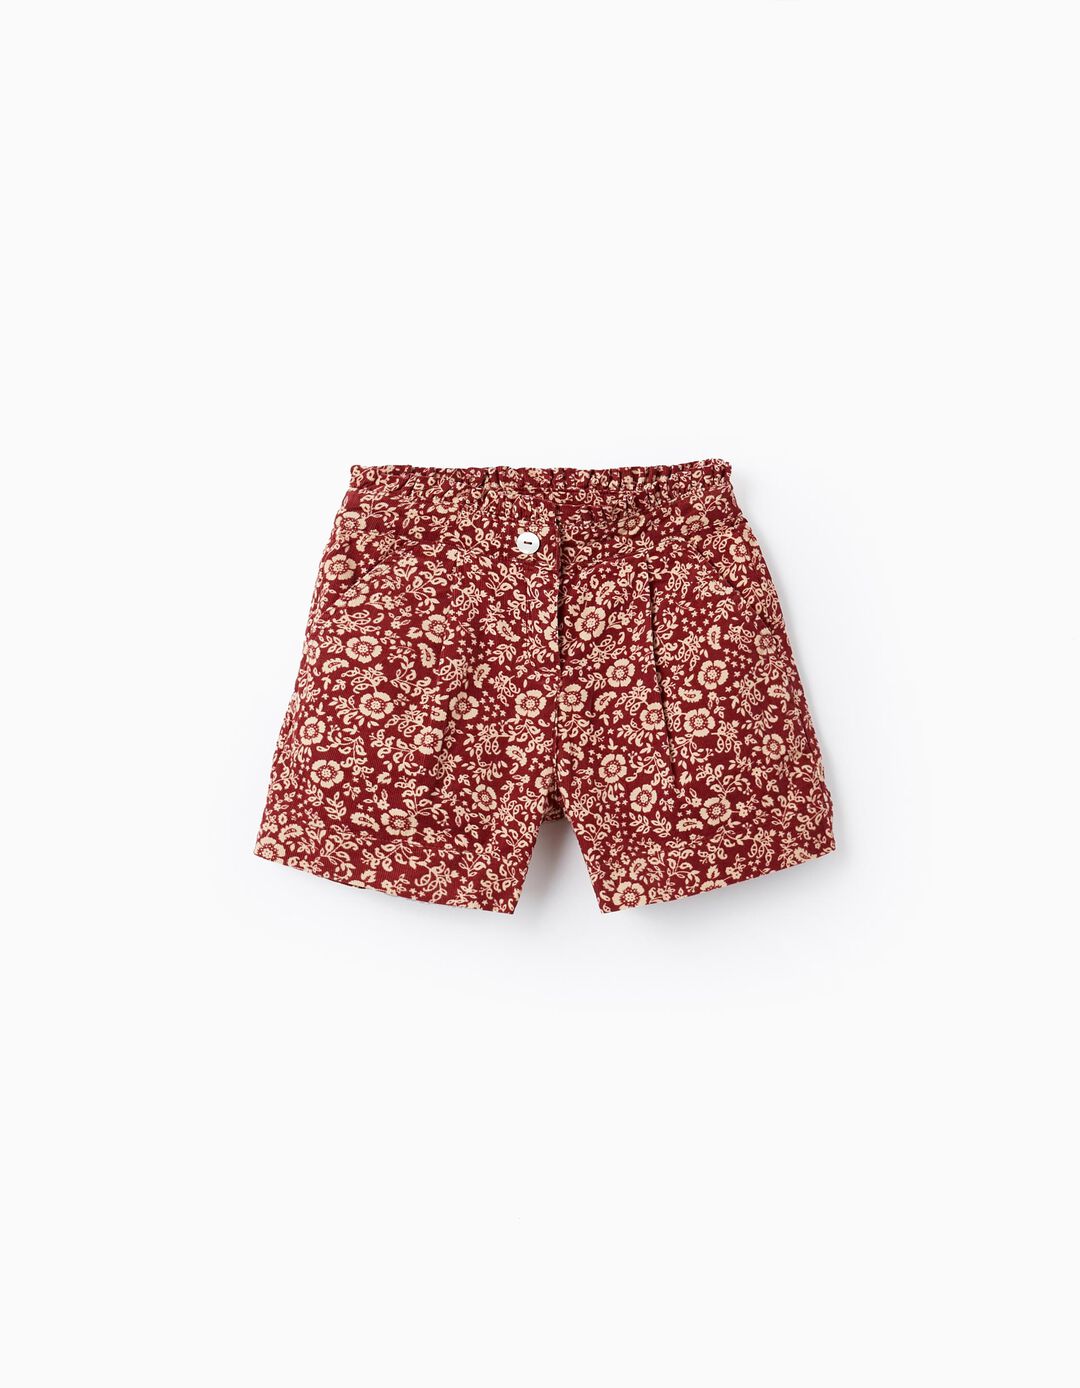 Bombazine Shorts for Girls 'Floral', Dark Red